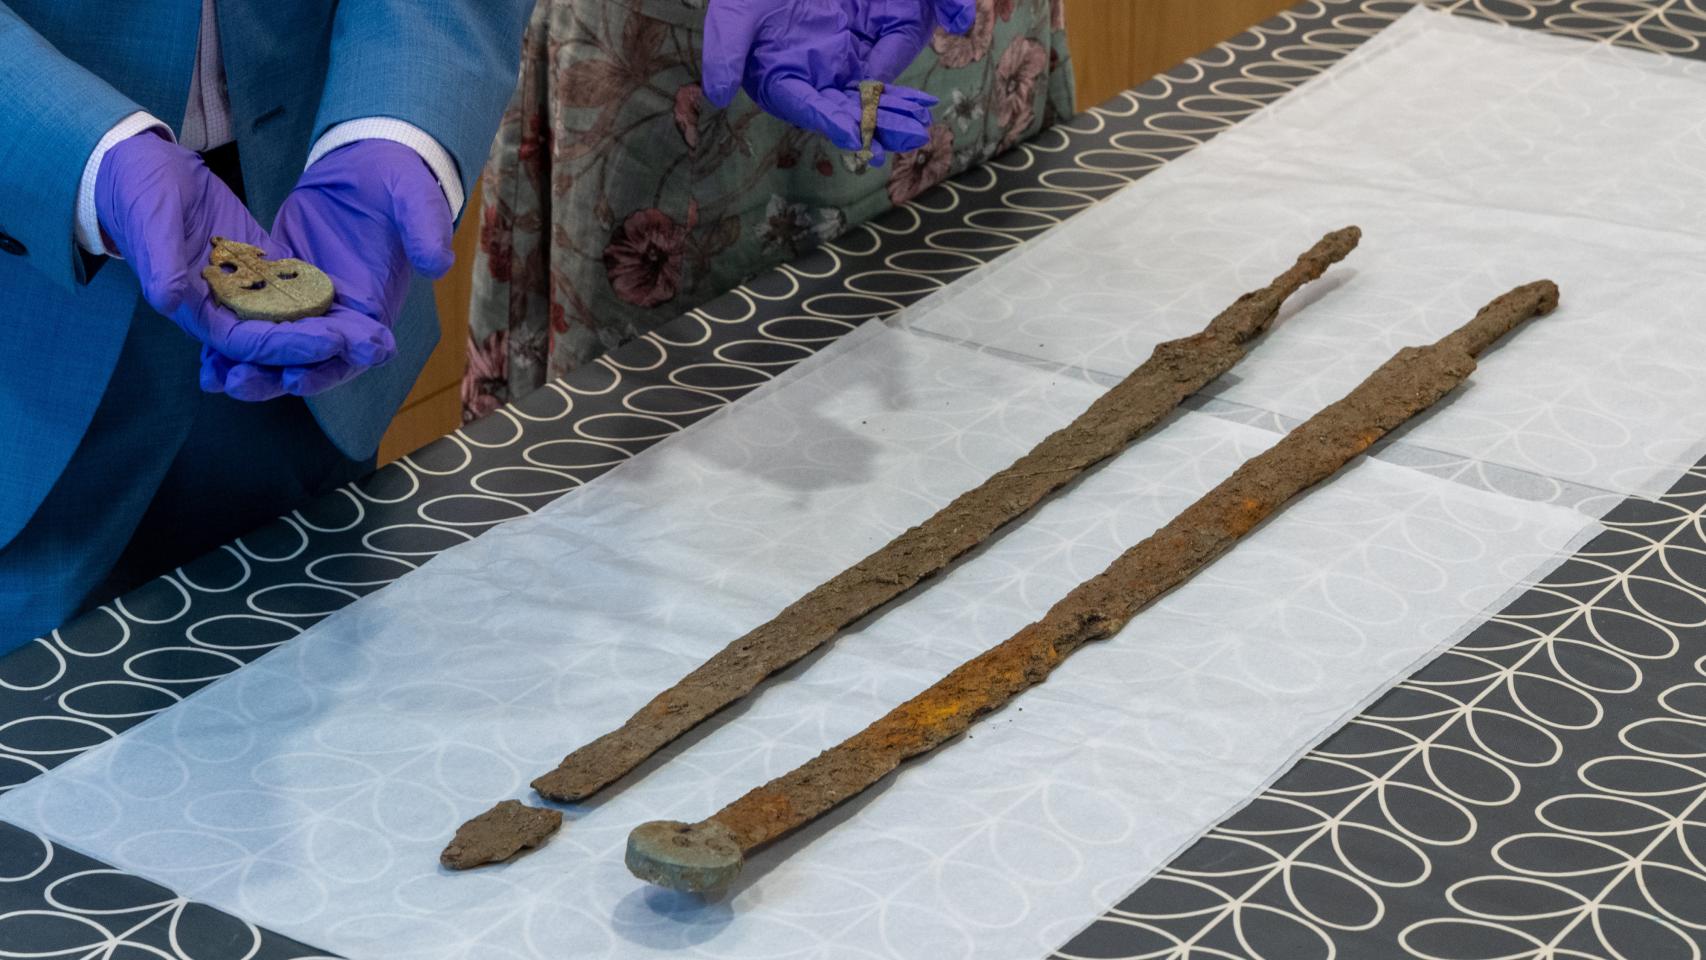 Las espadas romanas halladas en Inglaterra